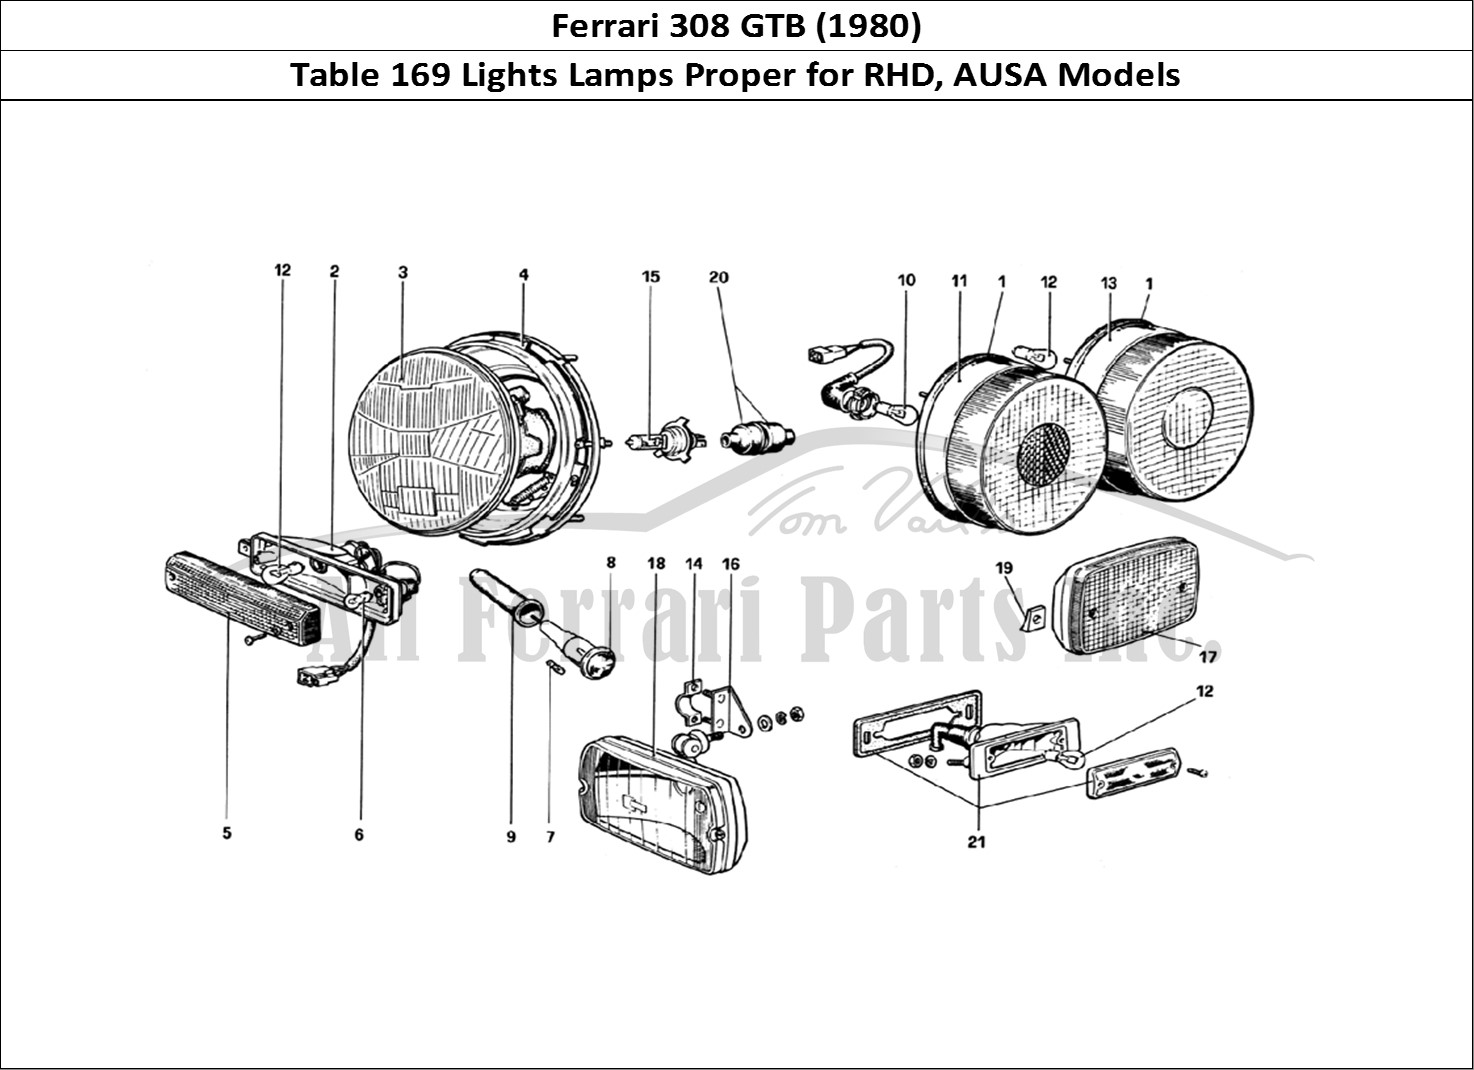 Ferrari Parts Ferrari 308 GTB (1980) Page 169 Lights (Variants for RHD